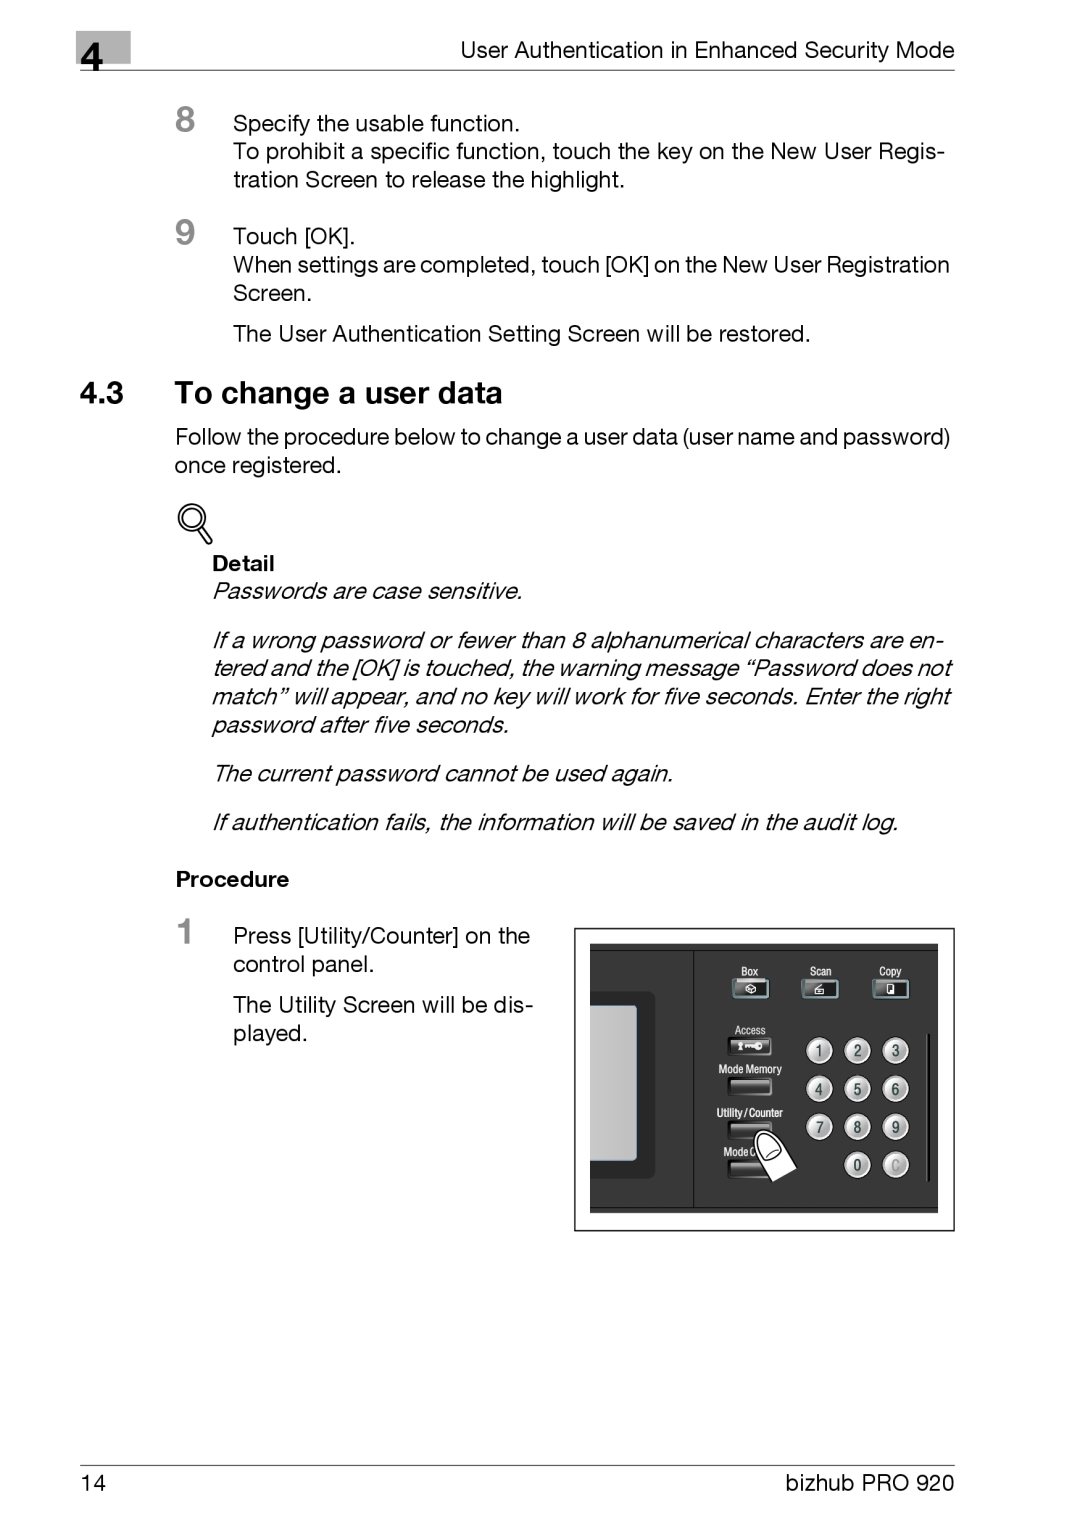 Konica Minolta 920 manual To change a user data, Detail, Procedure 